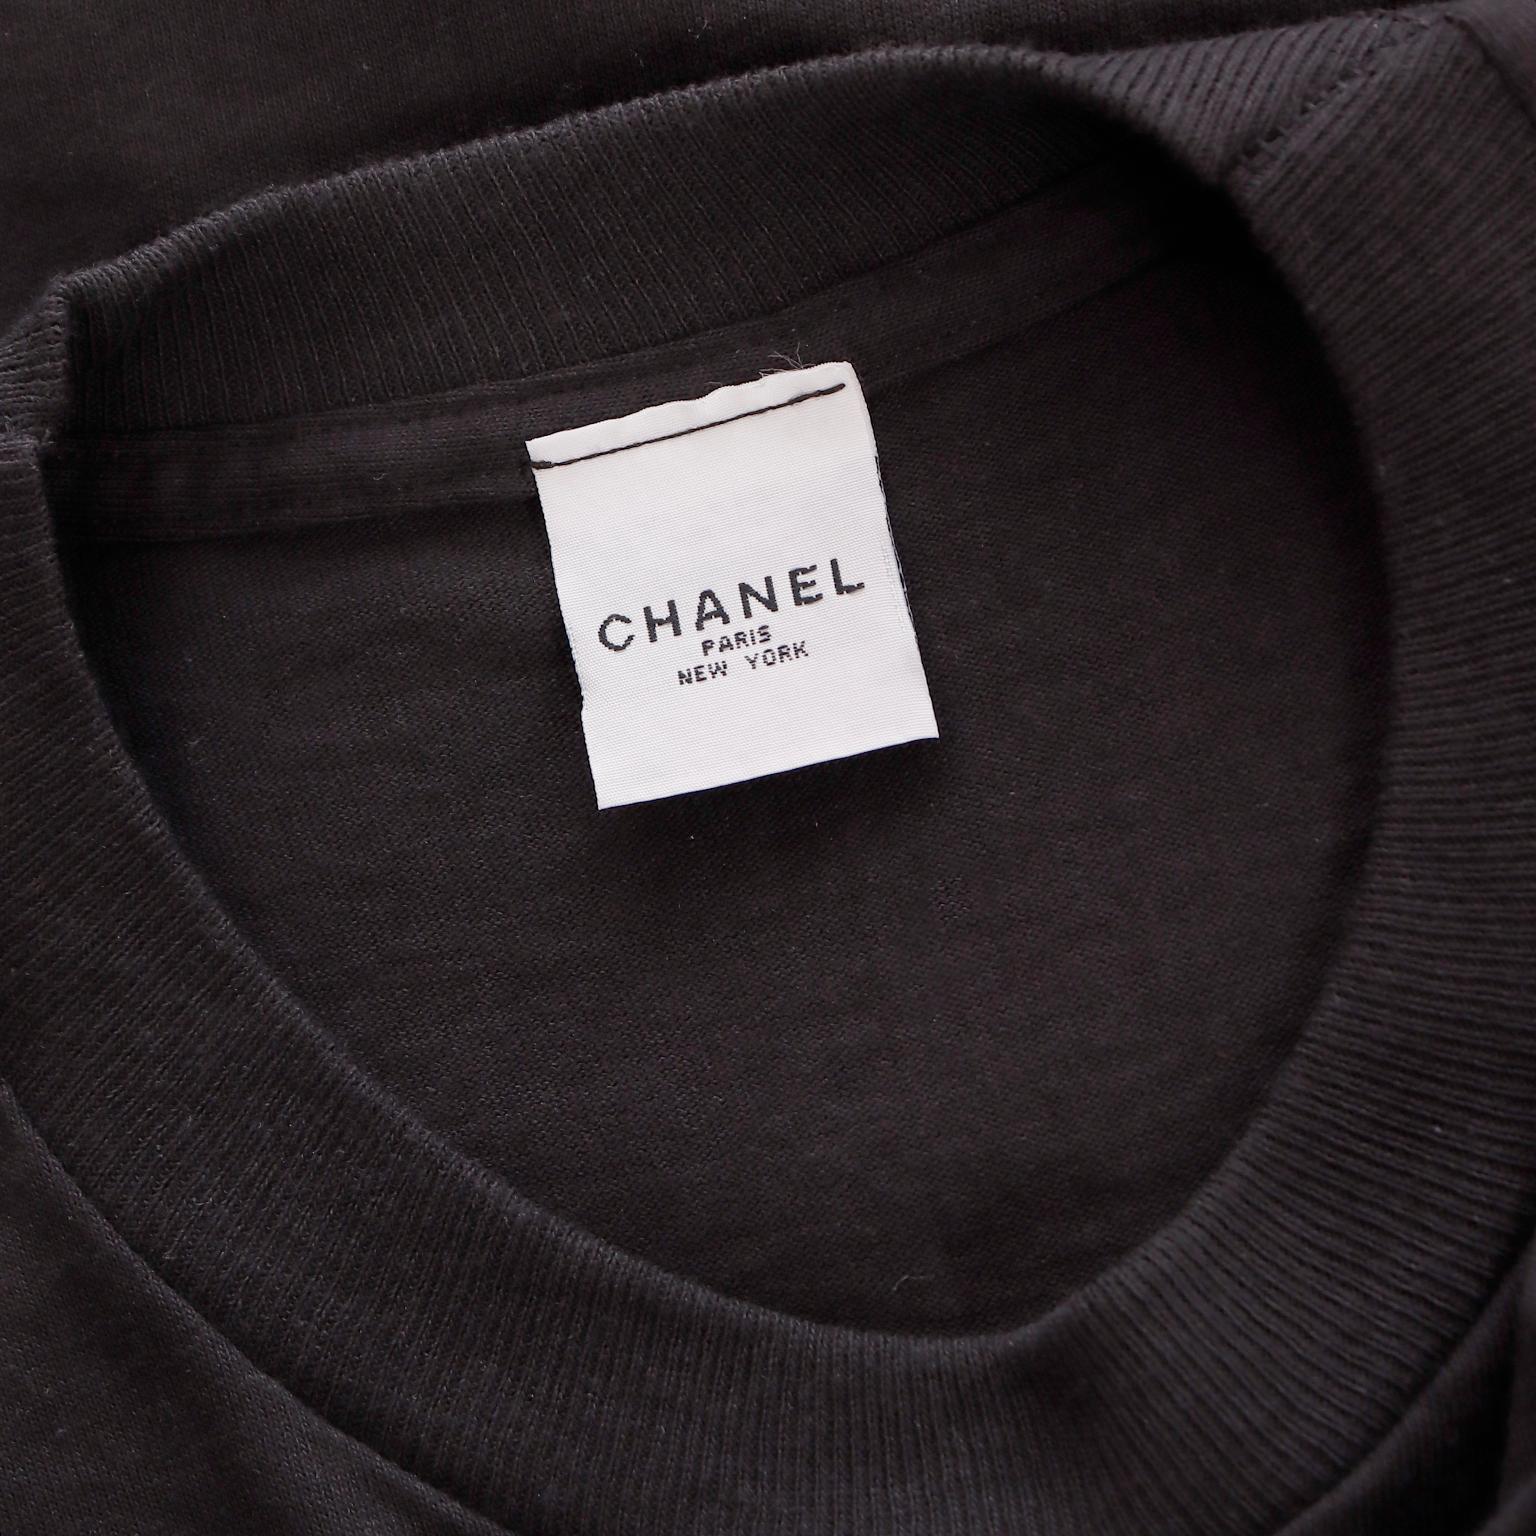 Vintage 1990 Chanel Egoiste Black & White Cotton Campaign Promotional Tee Shirt For Sale 1